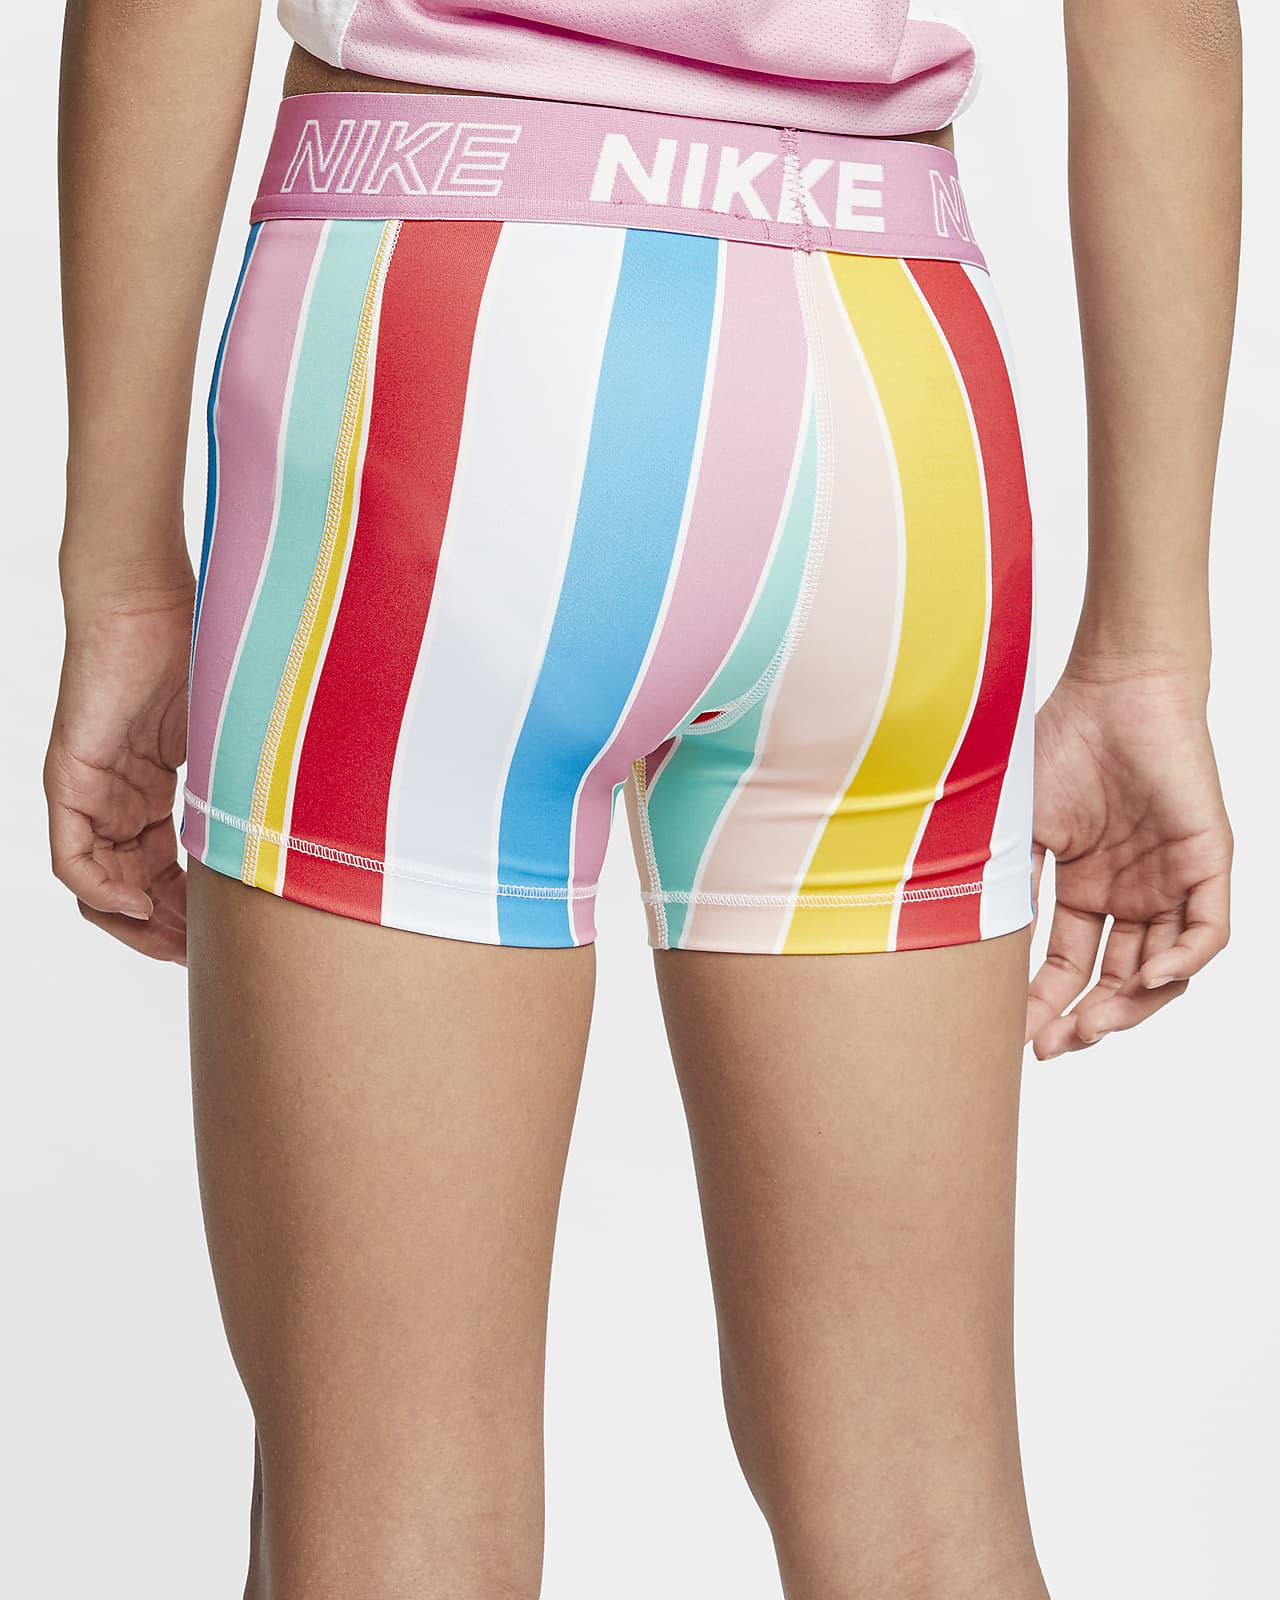 nike pro shorts womens colourful